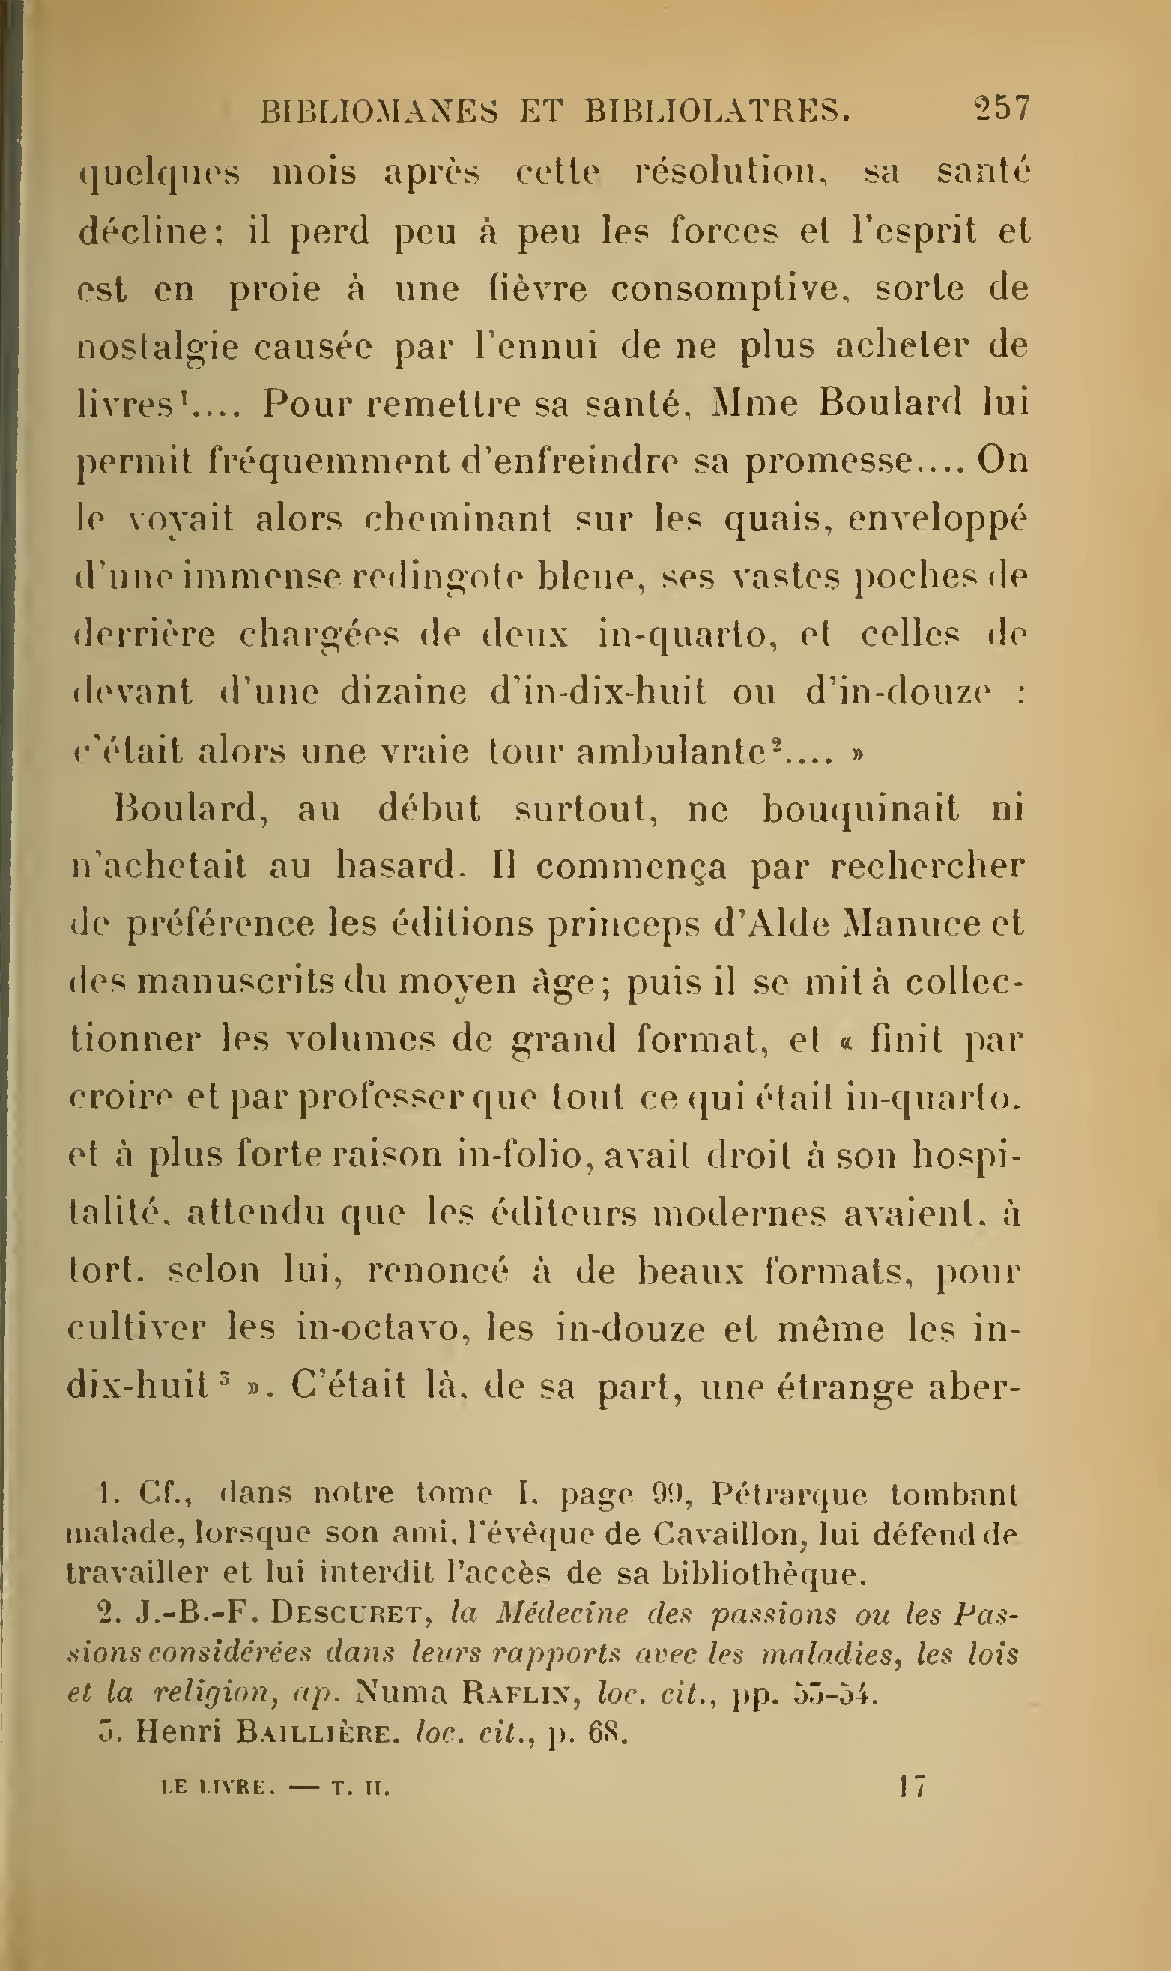 Albert Cim, Le Livre, t. II, p. 257.